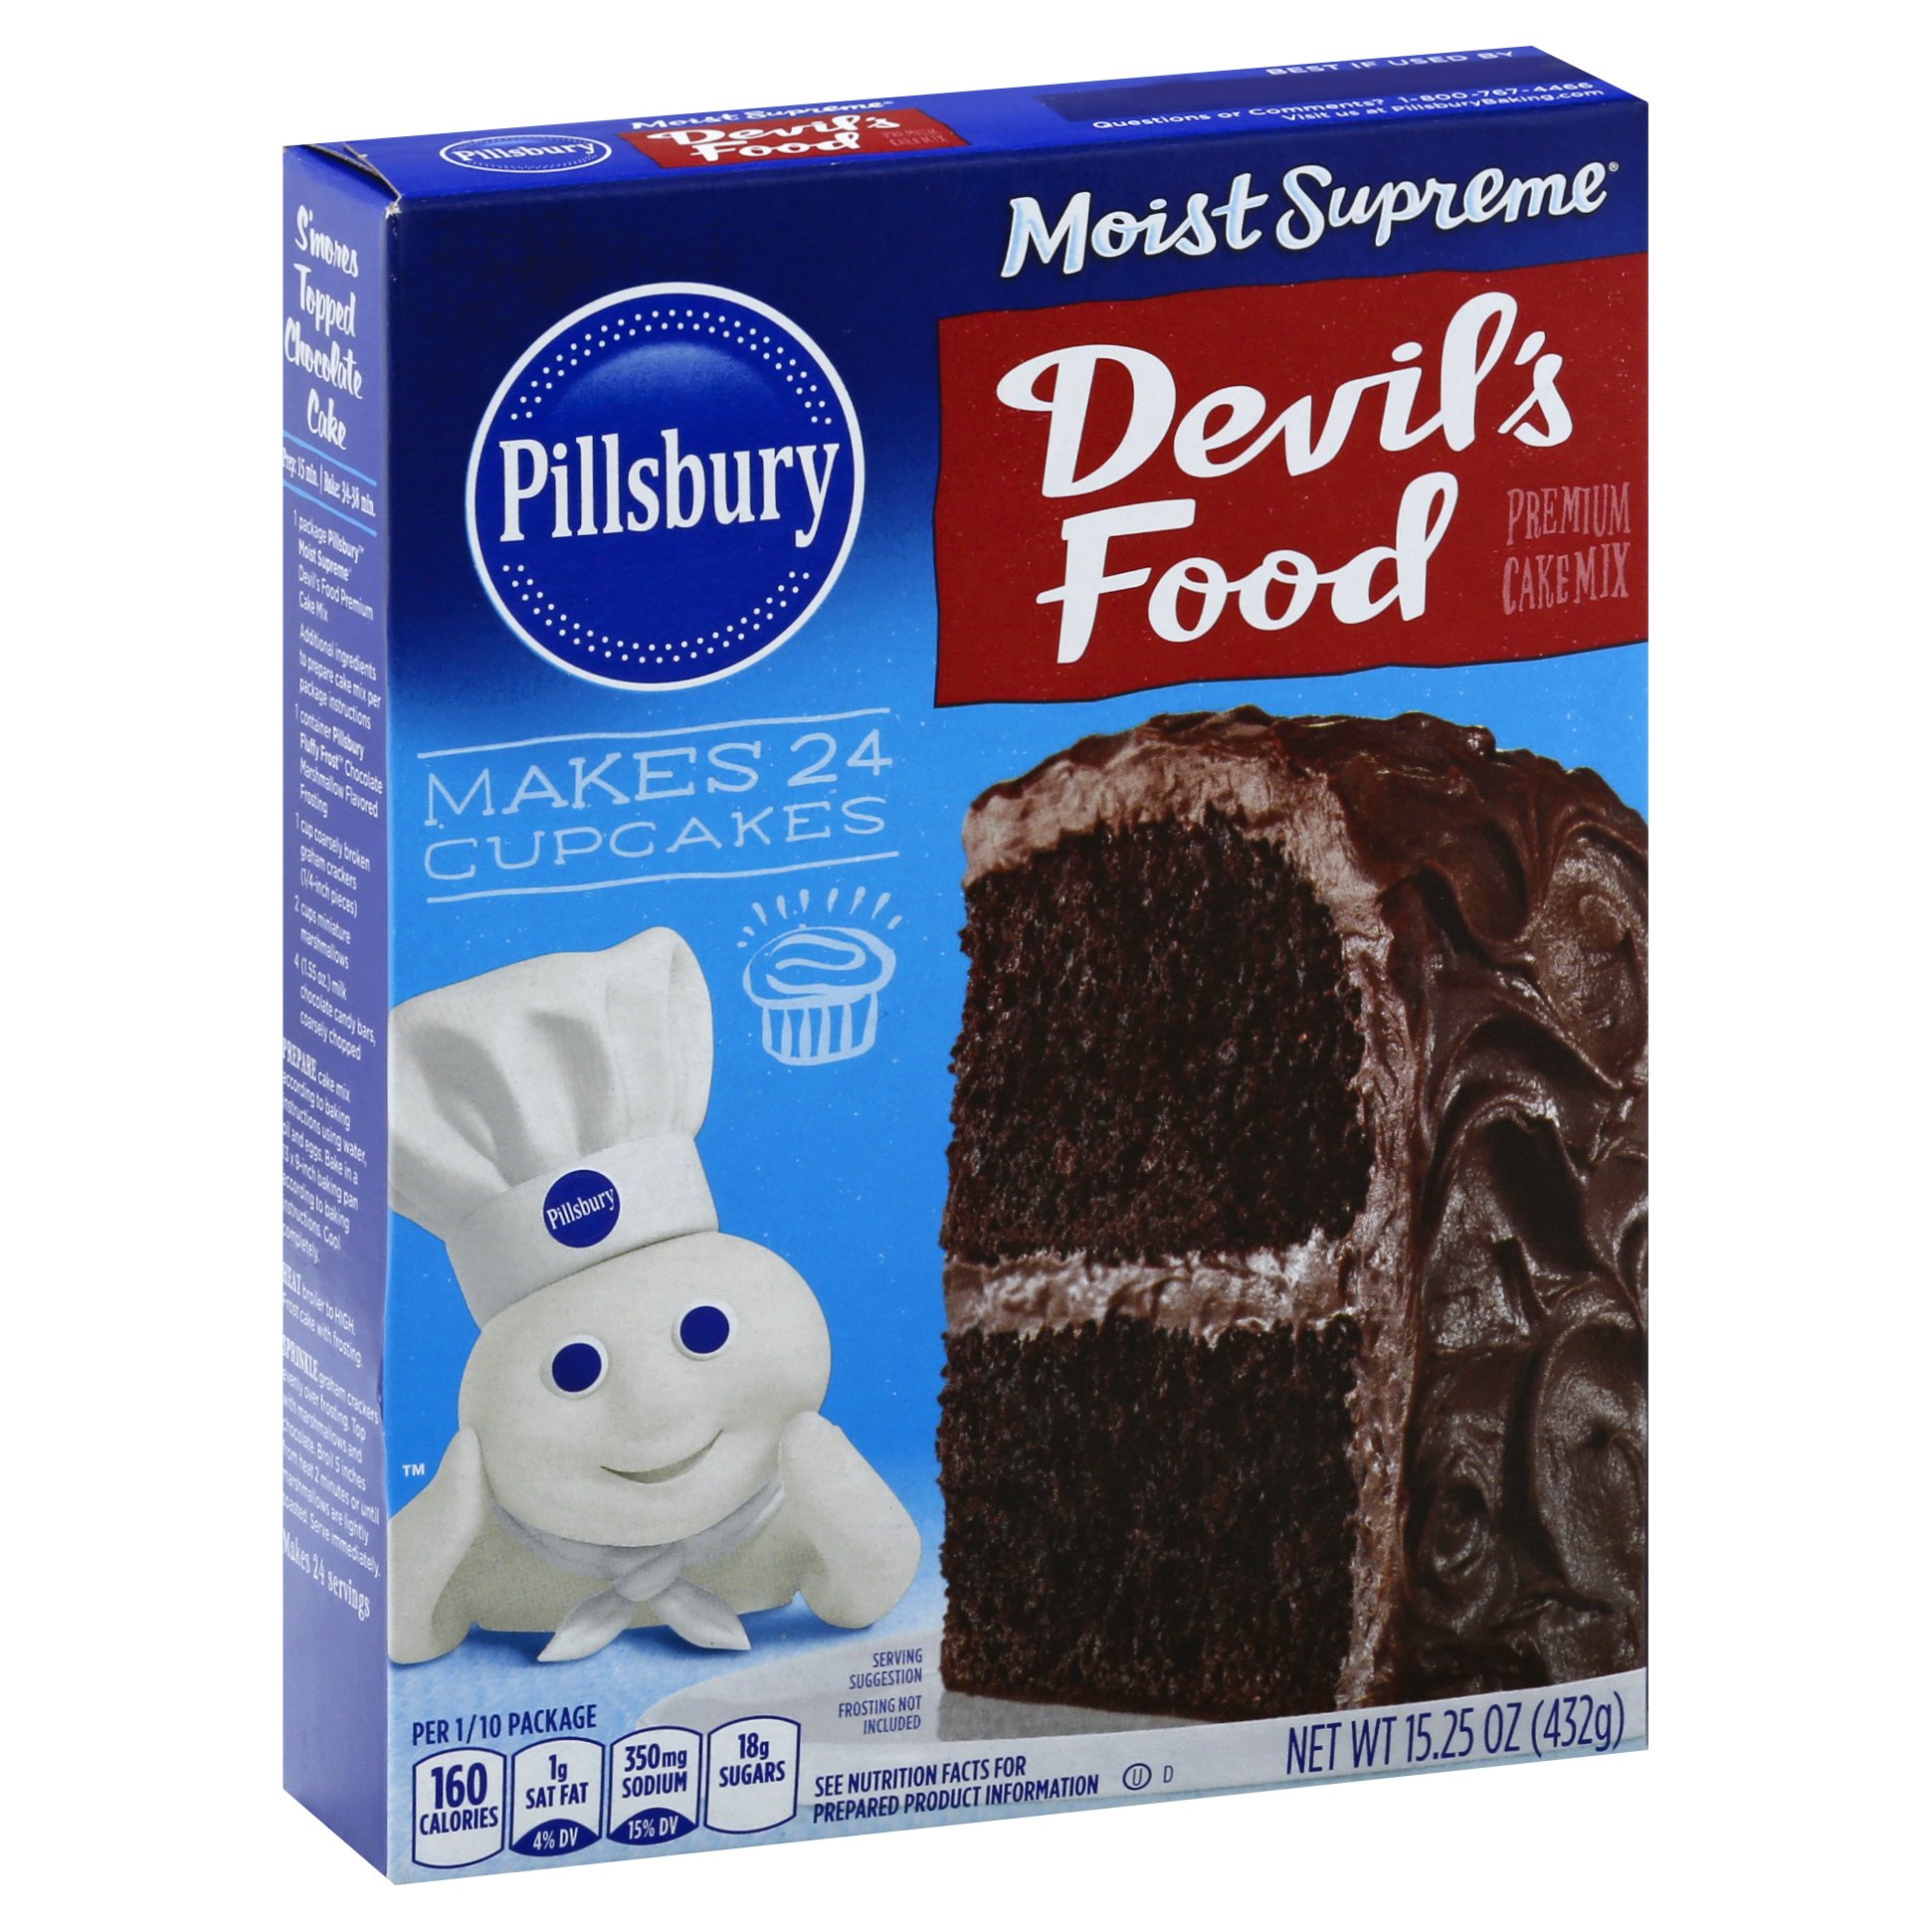 Pillsbury Moist Supreme Devils Food Cake Mix 15.3 OZ 12-Pack